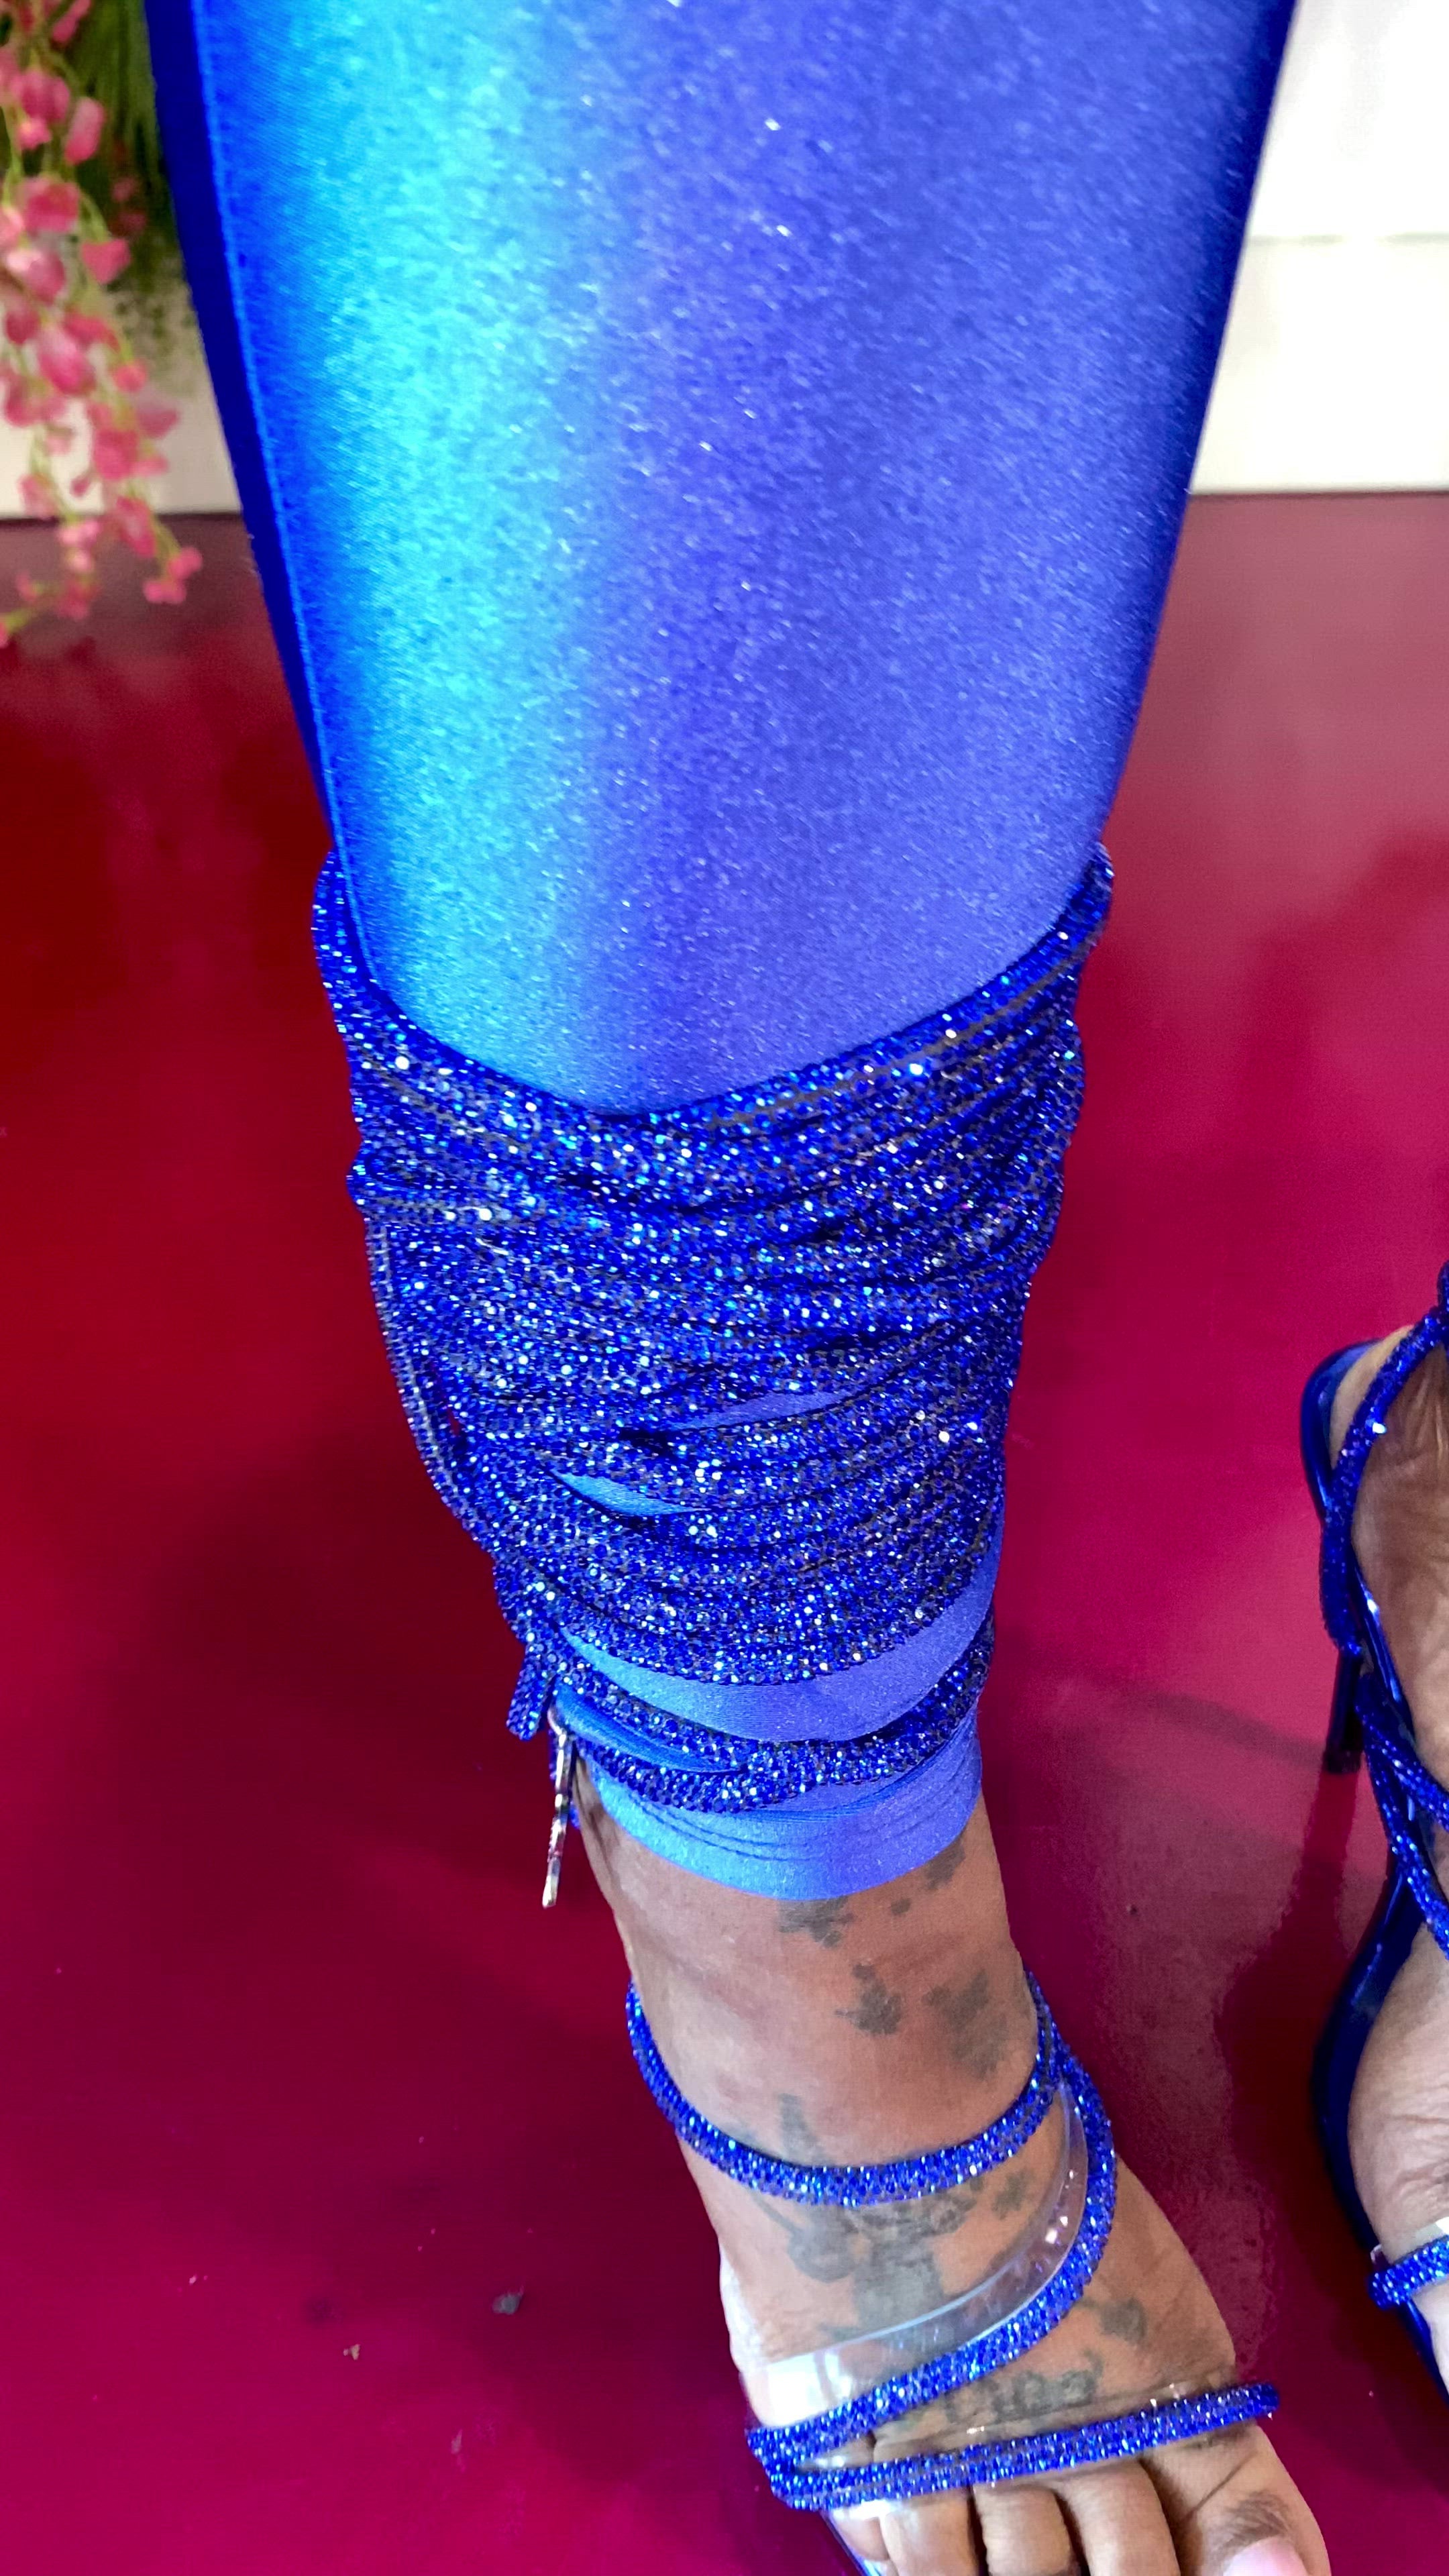 Blue diamond laced up heels